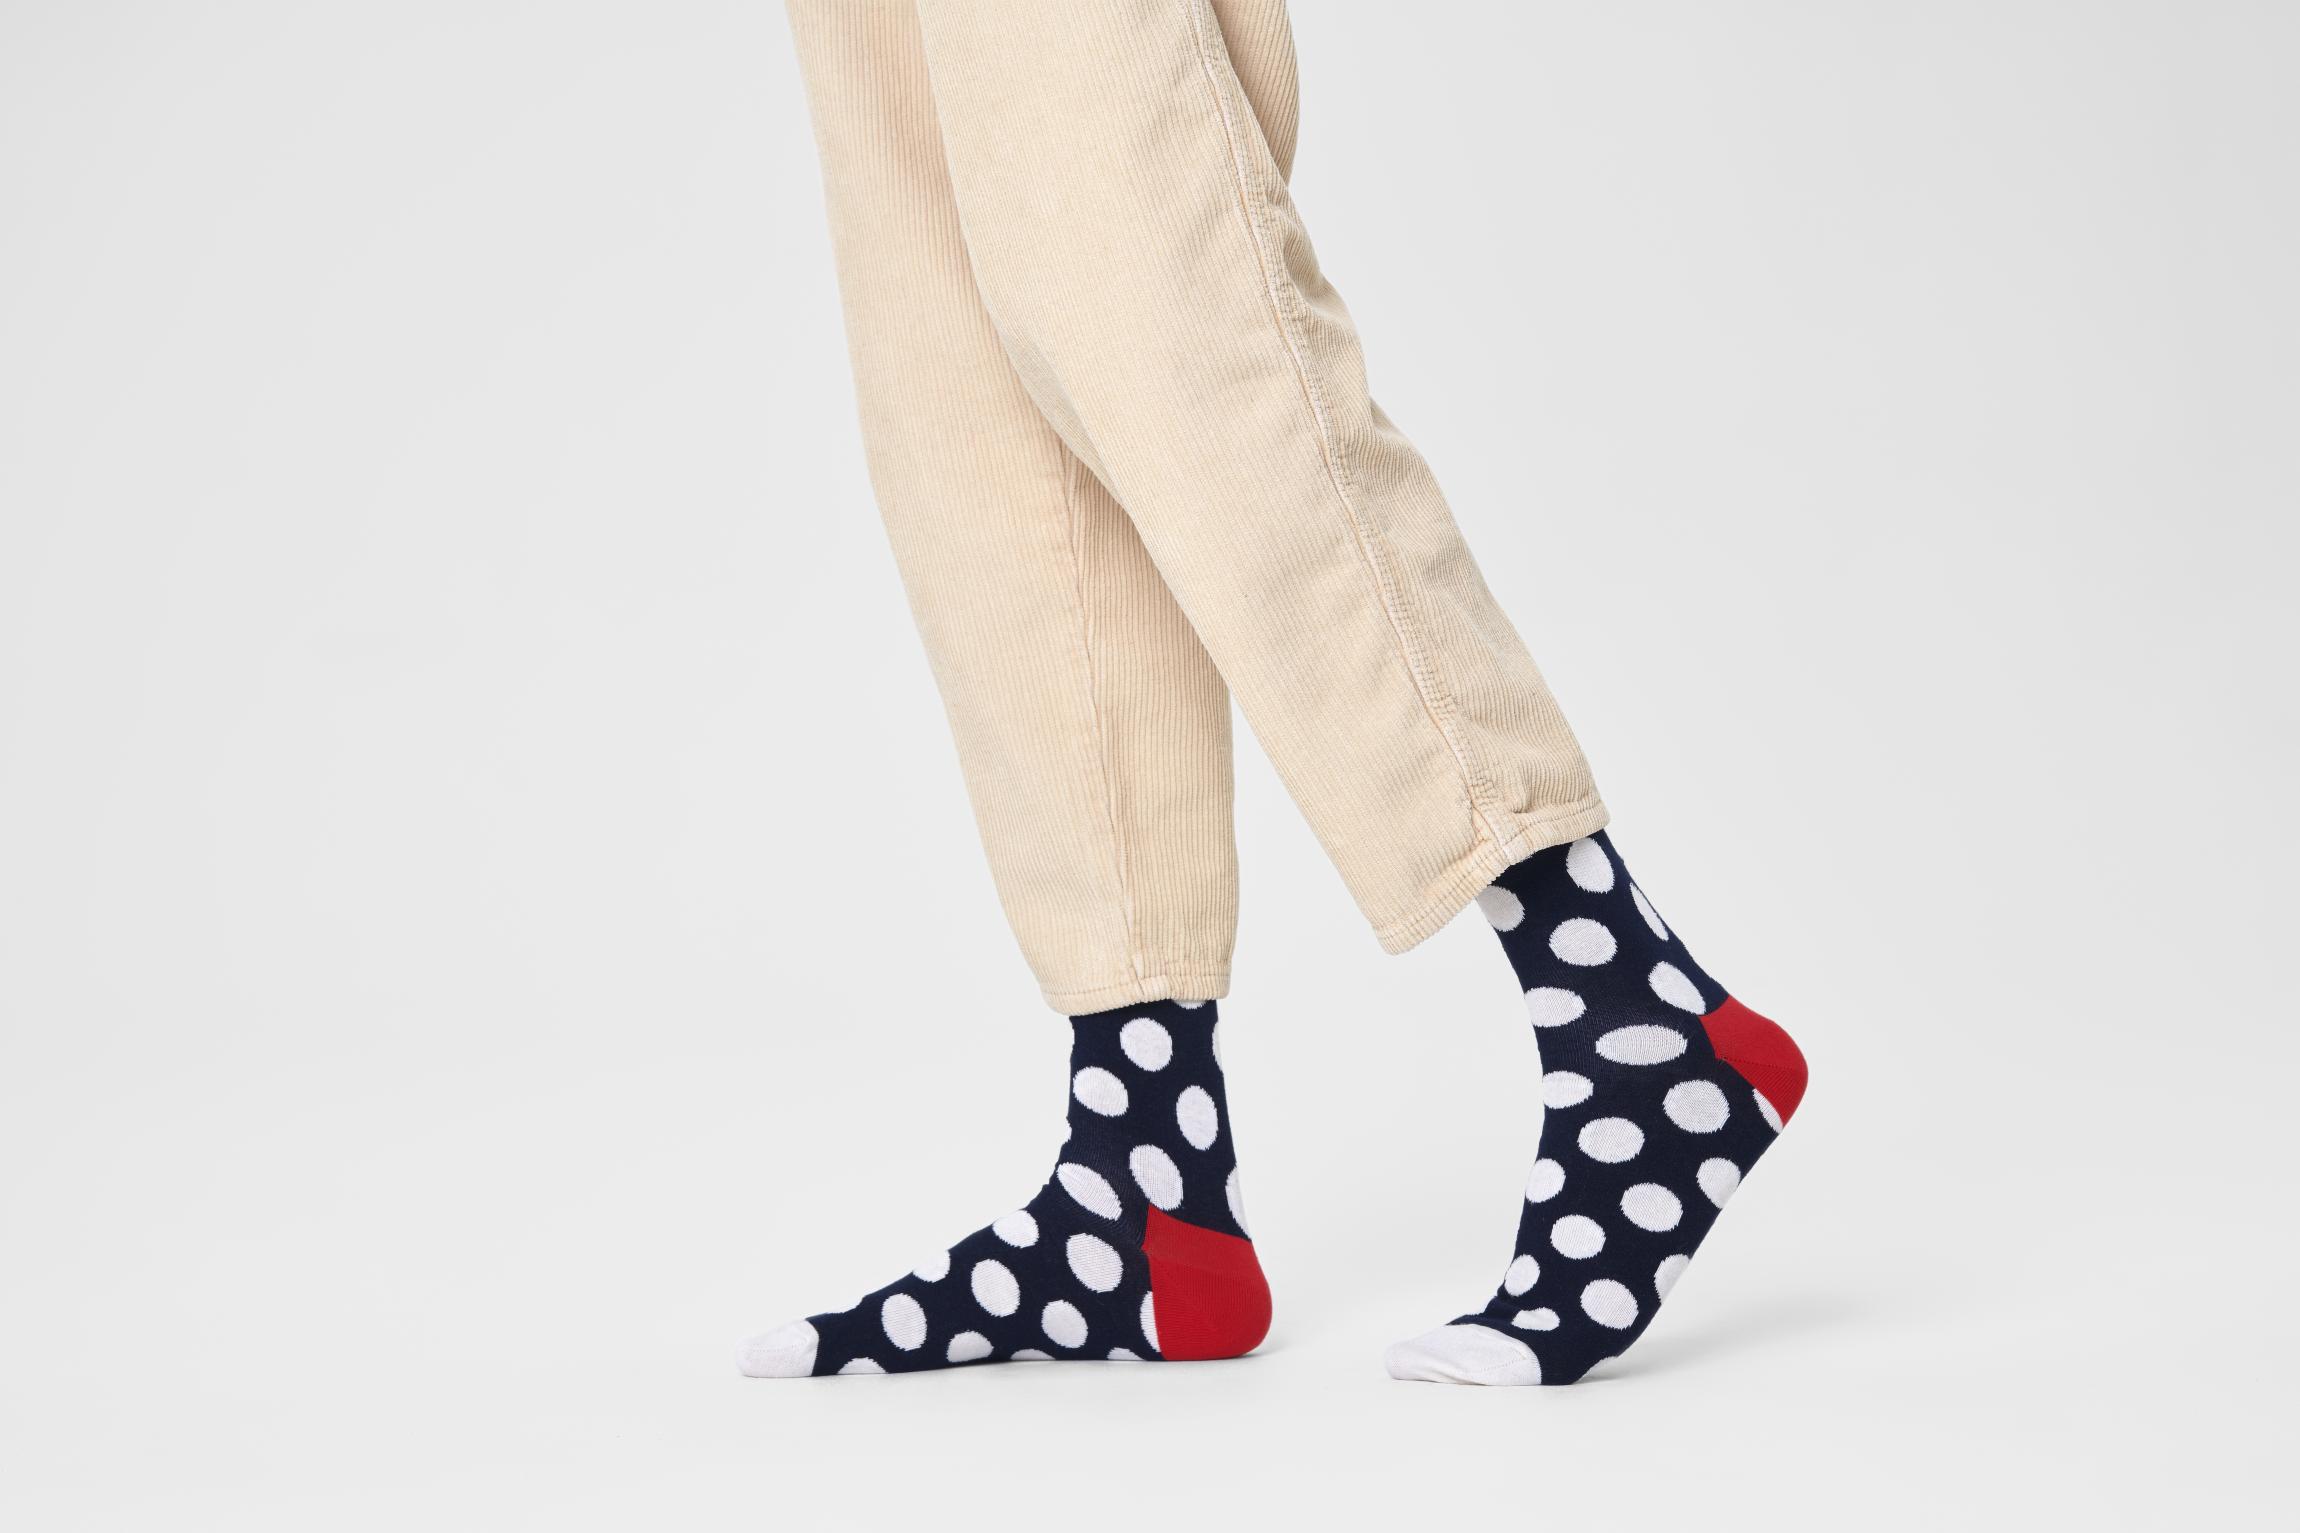 Modré ponožky Happy Socks s puntíky, vzor Big Dot